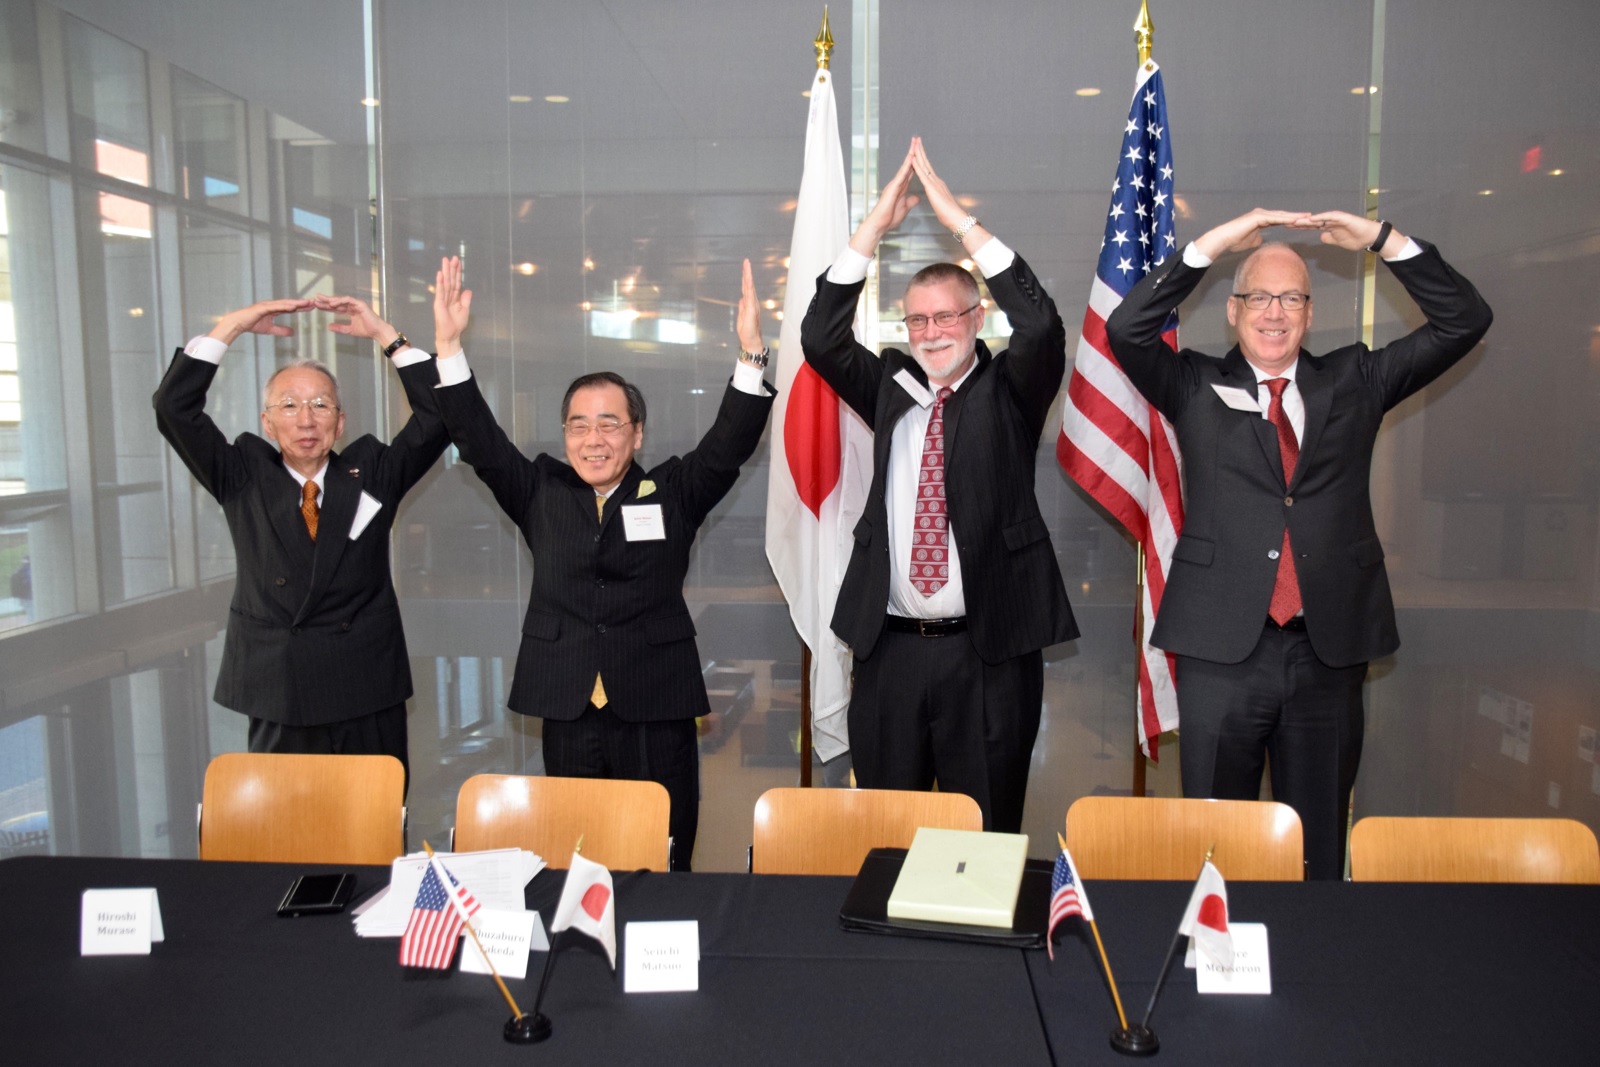 Shuzaburo Takeda, Seiichi Matsuo, Bruce McPheron, and David Manderscheid signing ceremony of the agreement at Thomson Library, March 9. Credit: courtesy of Victor van Buchem